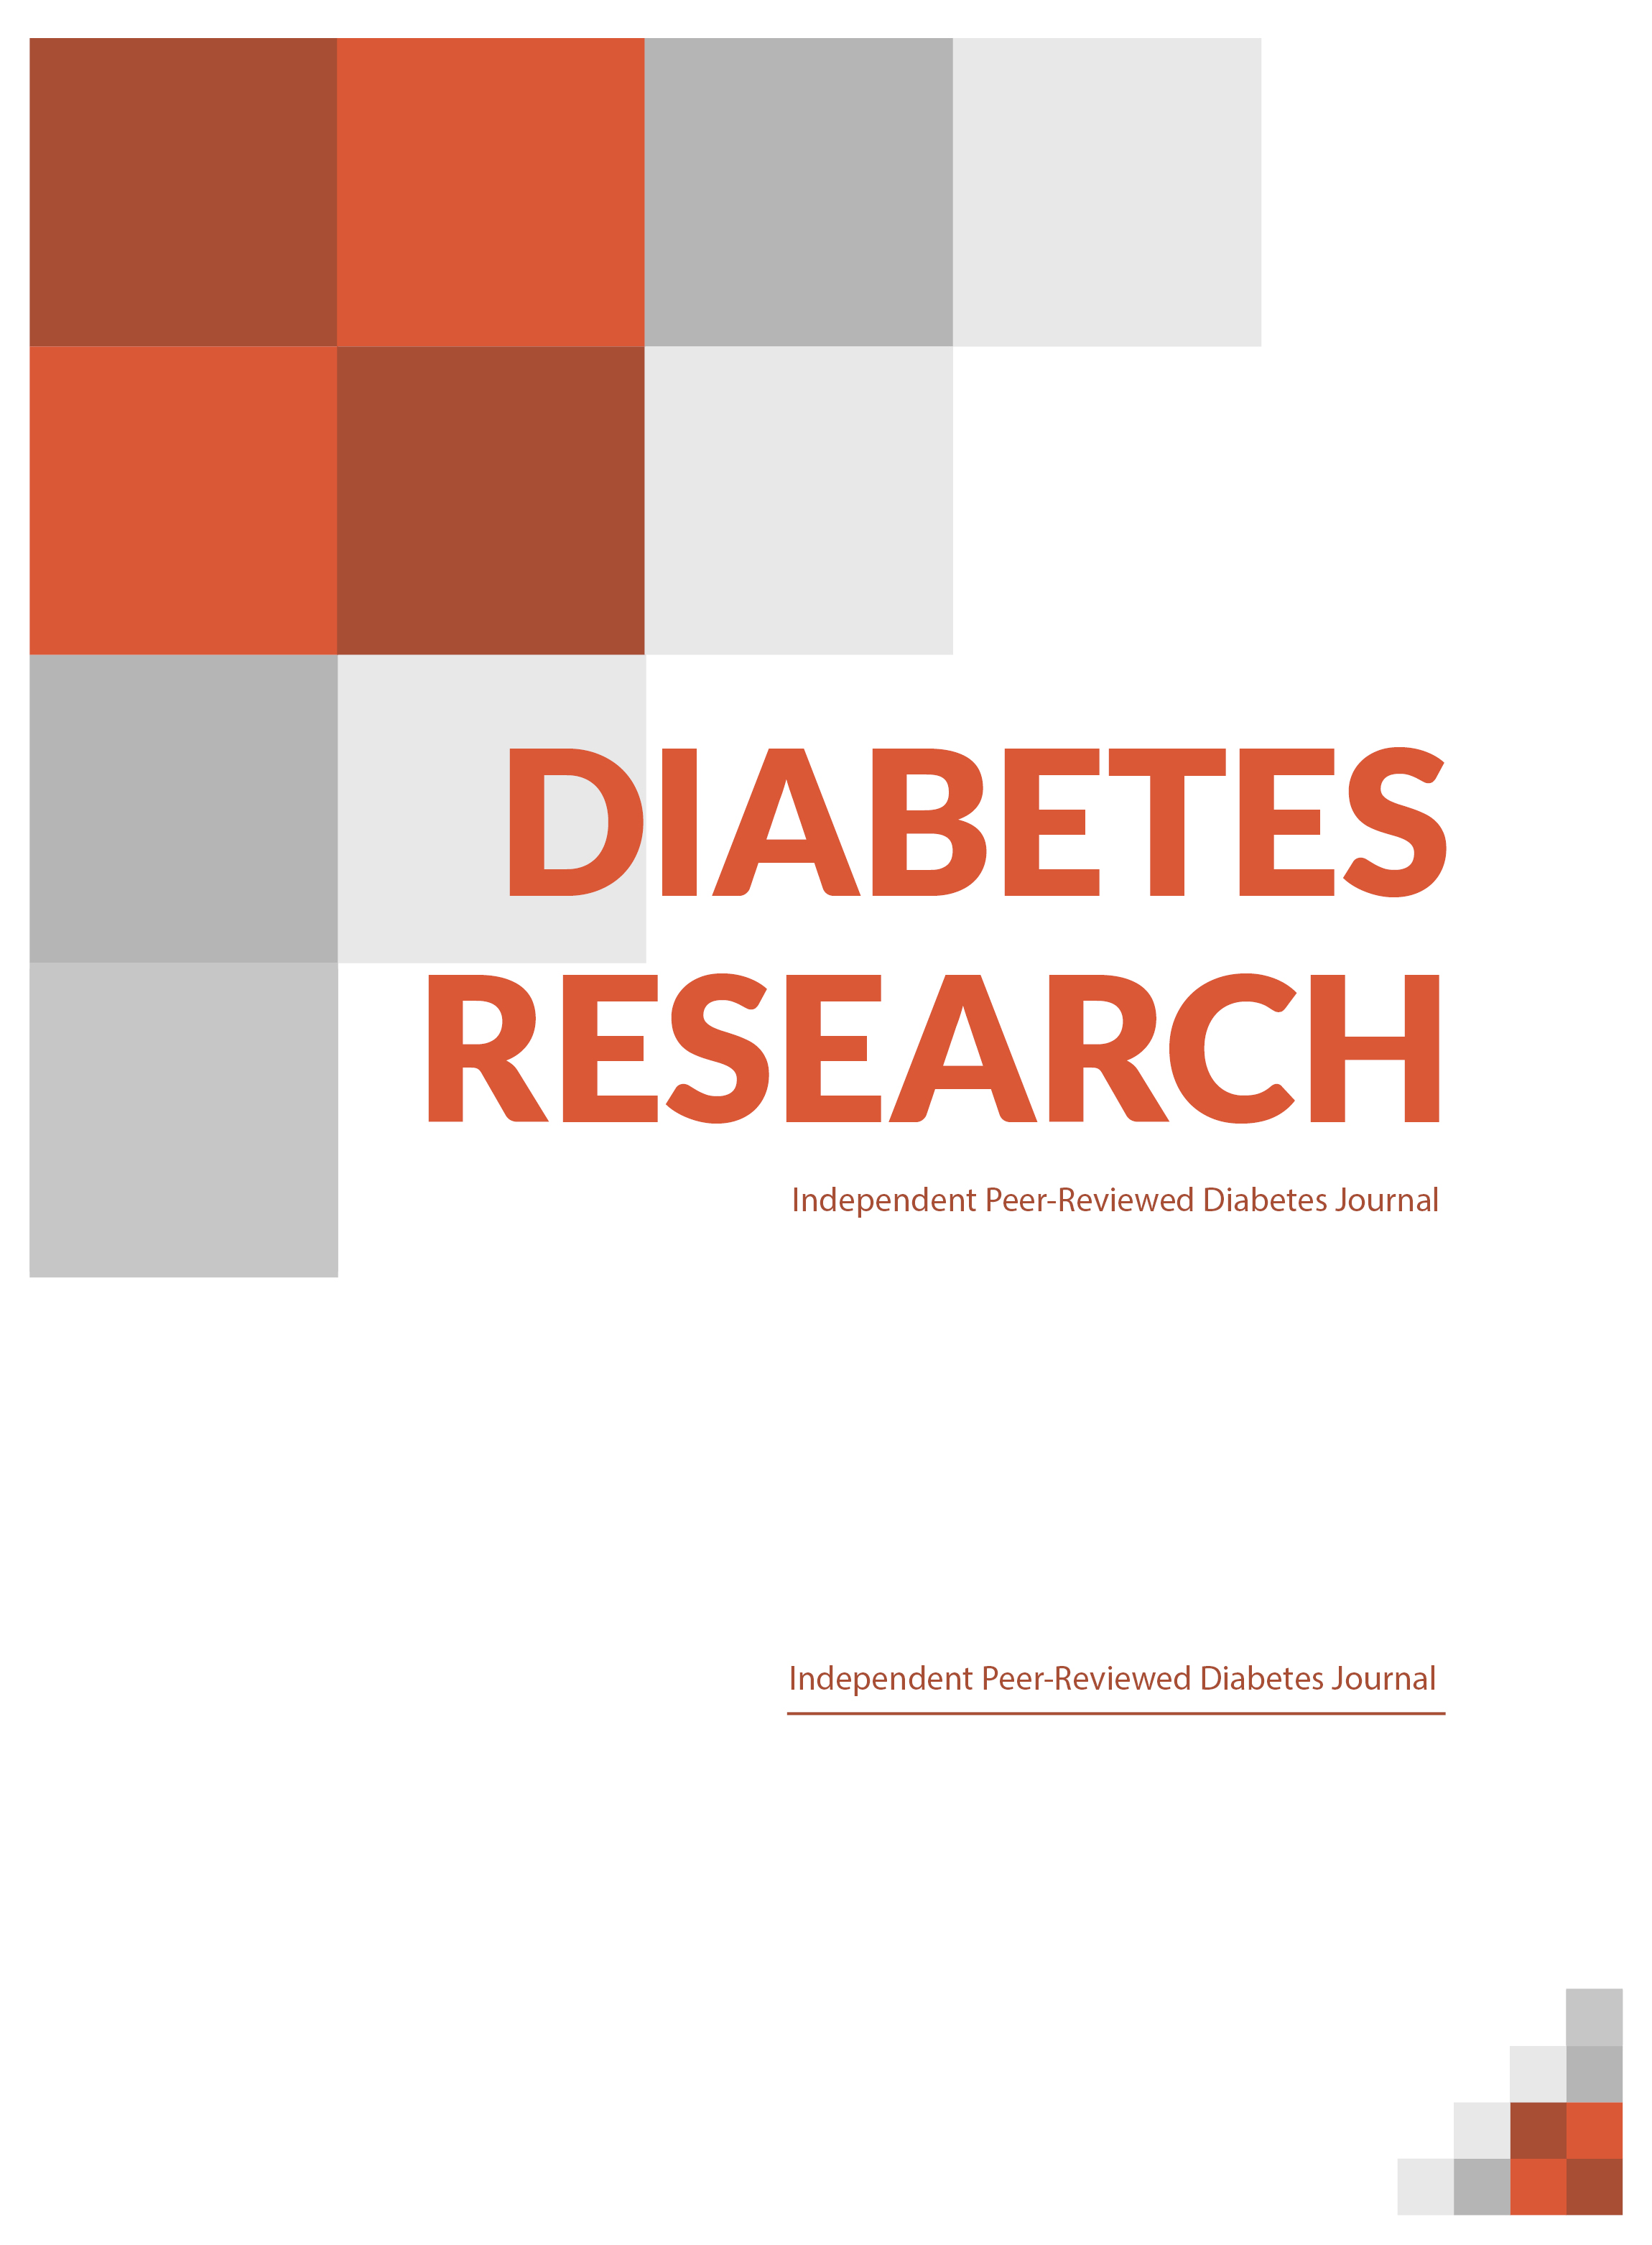 diabetes journals research articles